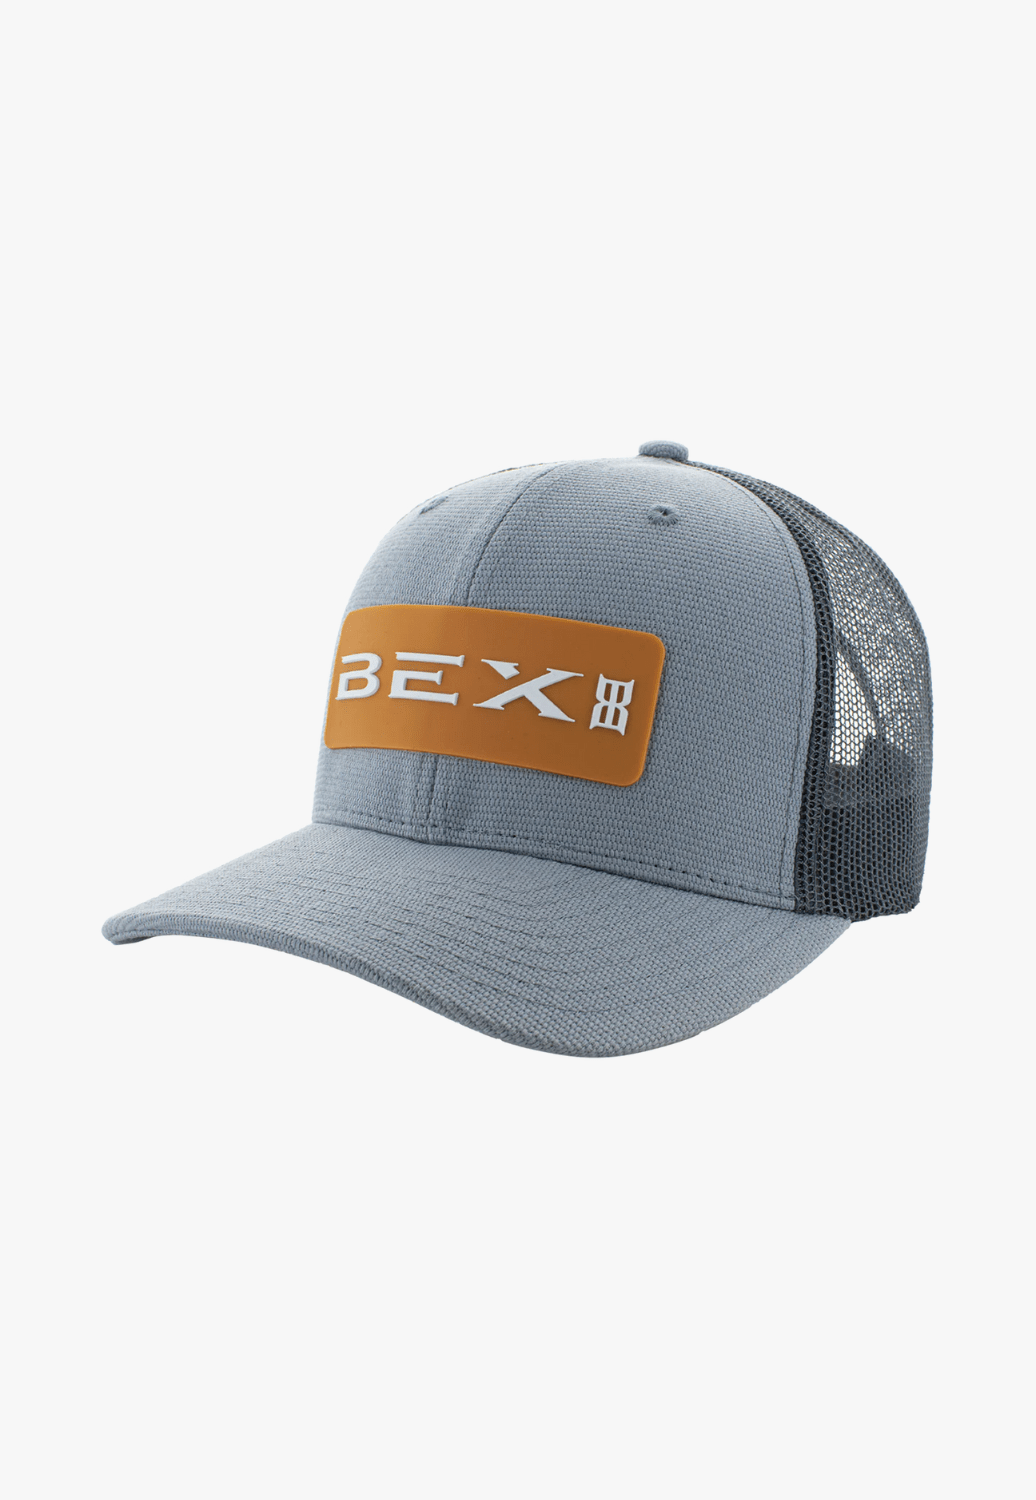 Bex Men's Albany Black with Logo Snapback Cap